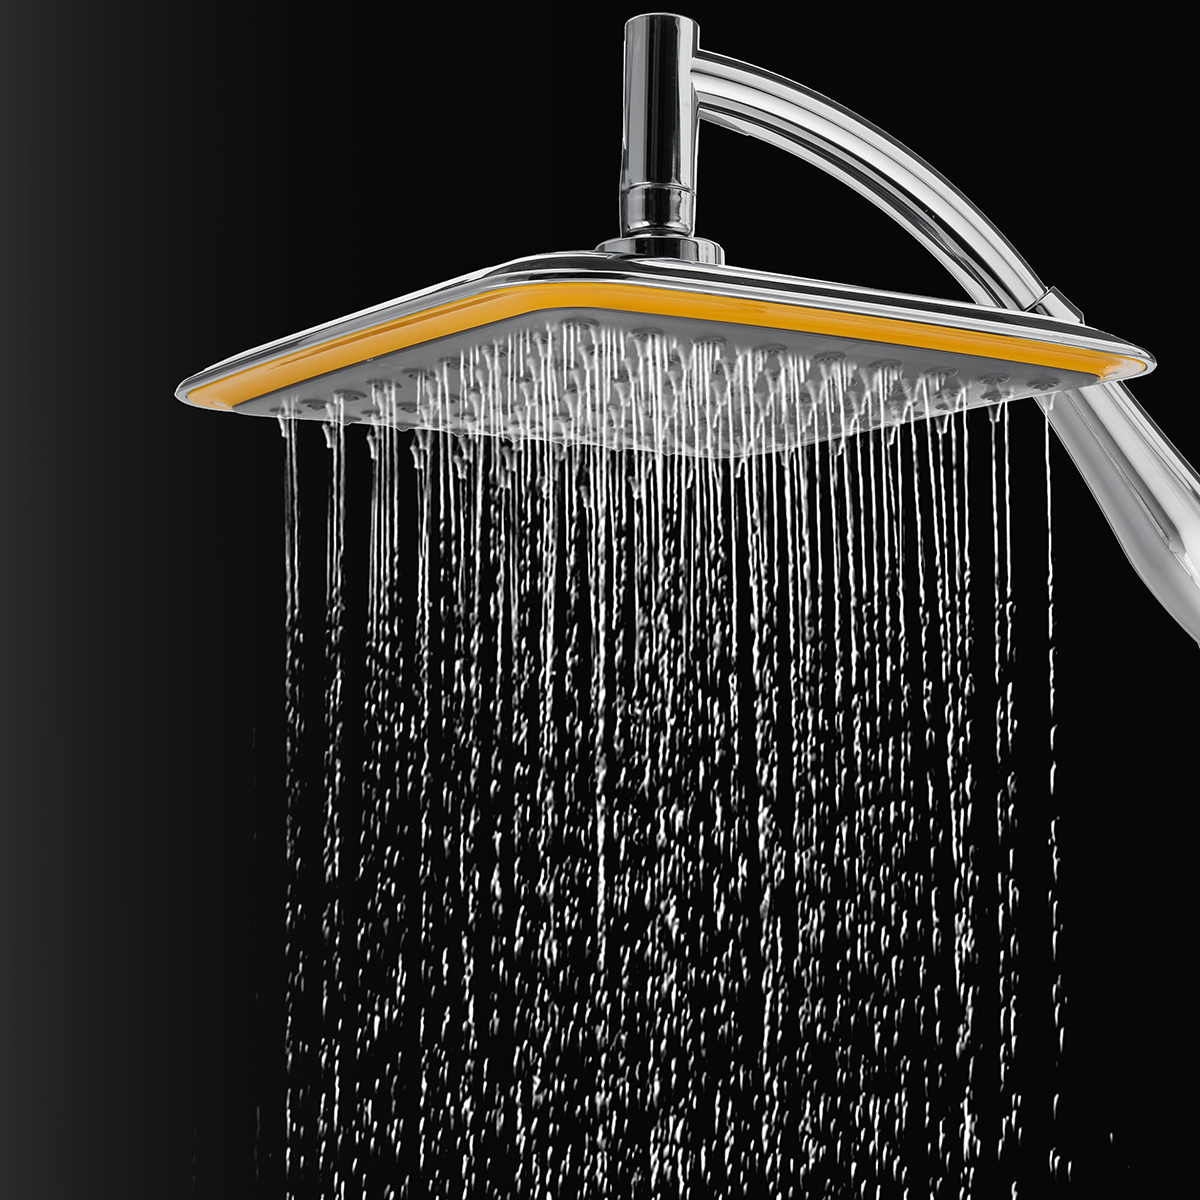 

8 Inch Rainfall Shower Head Bathroom Square Shower Head Pressurized Shower Spray